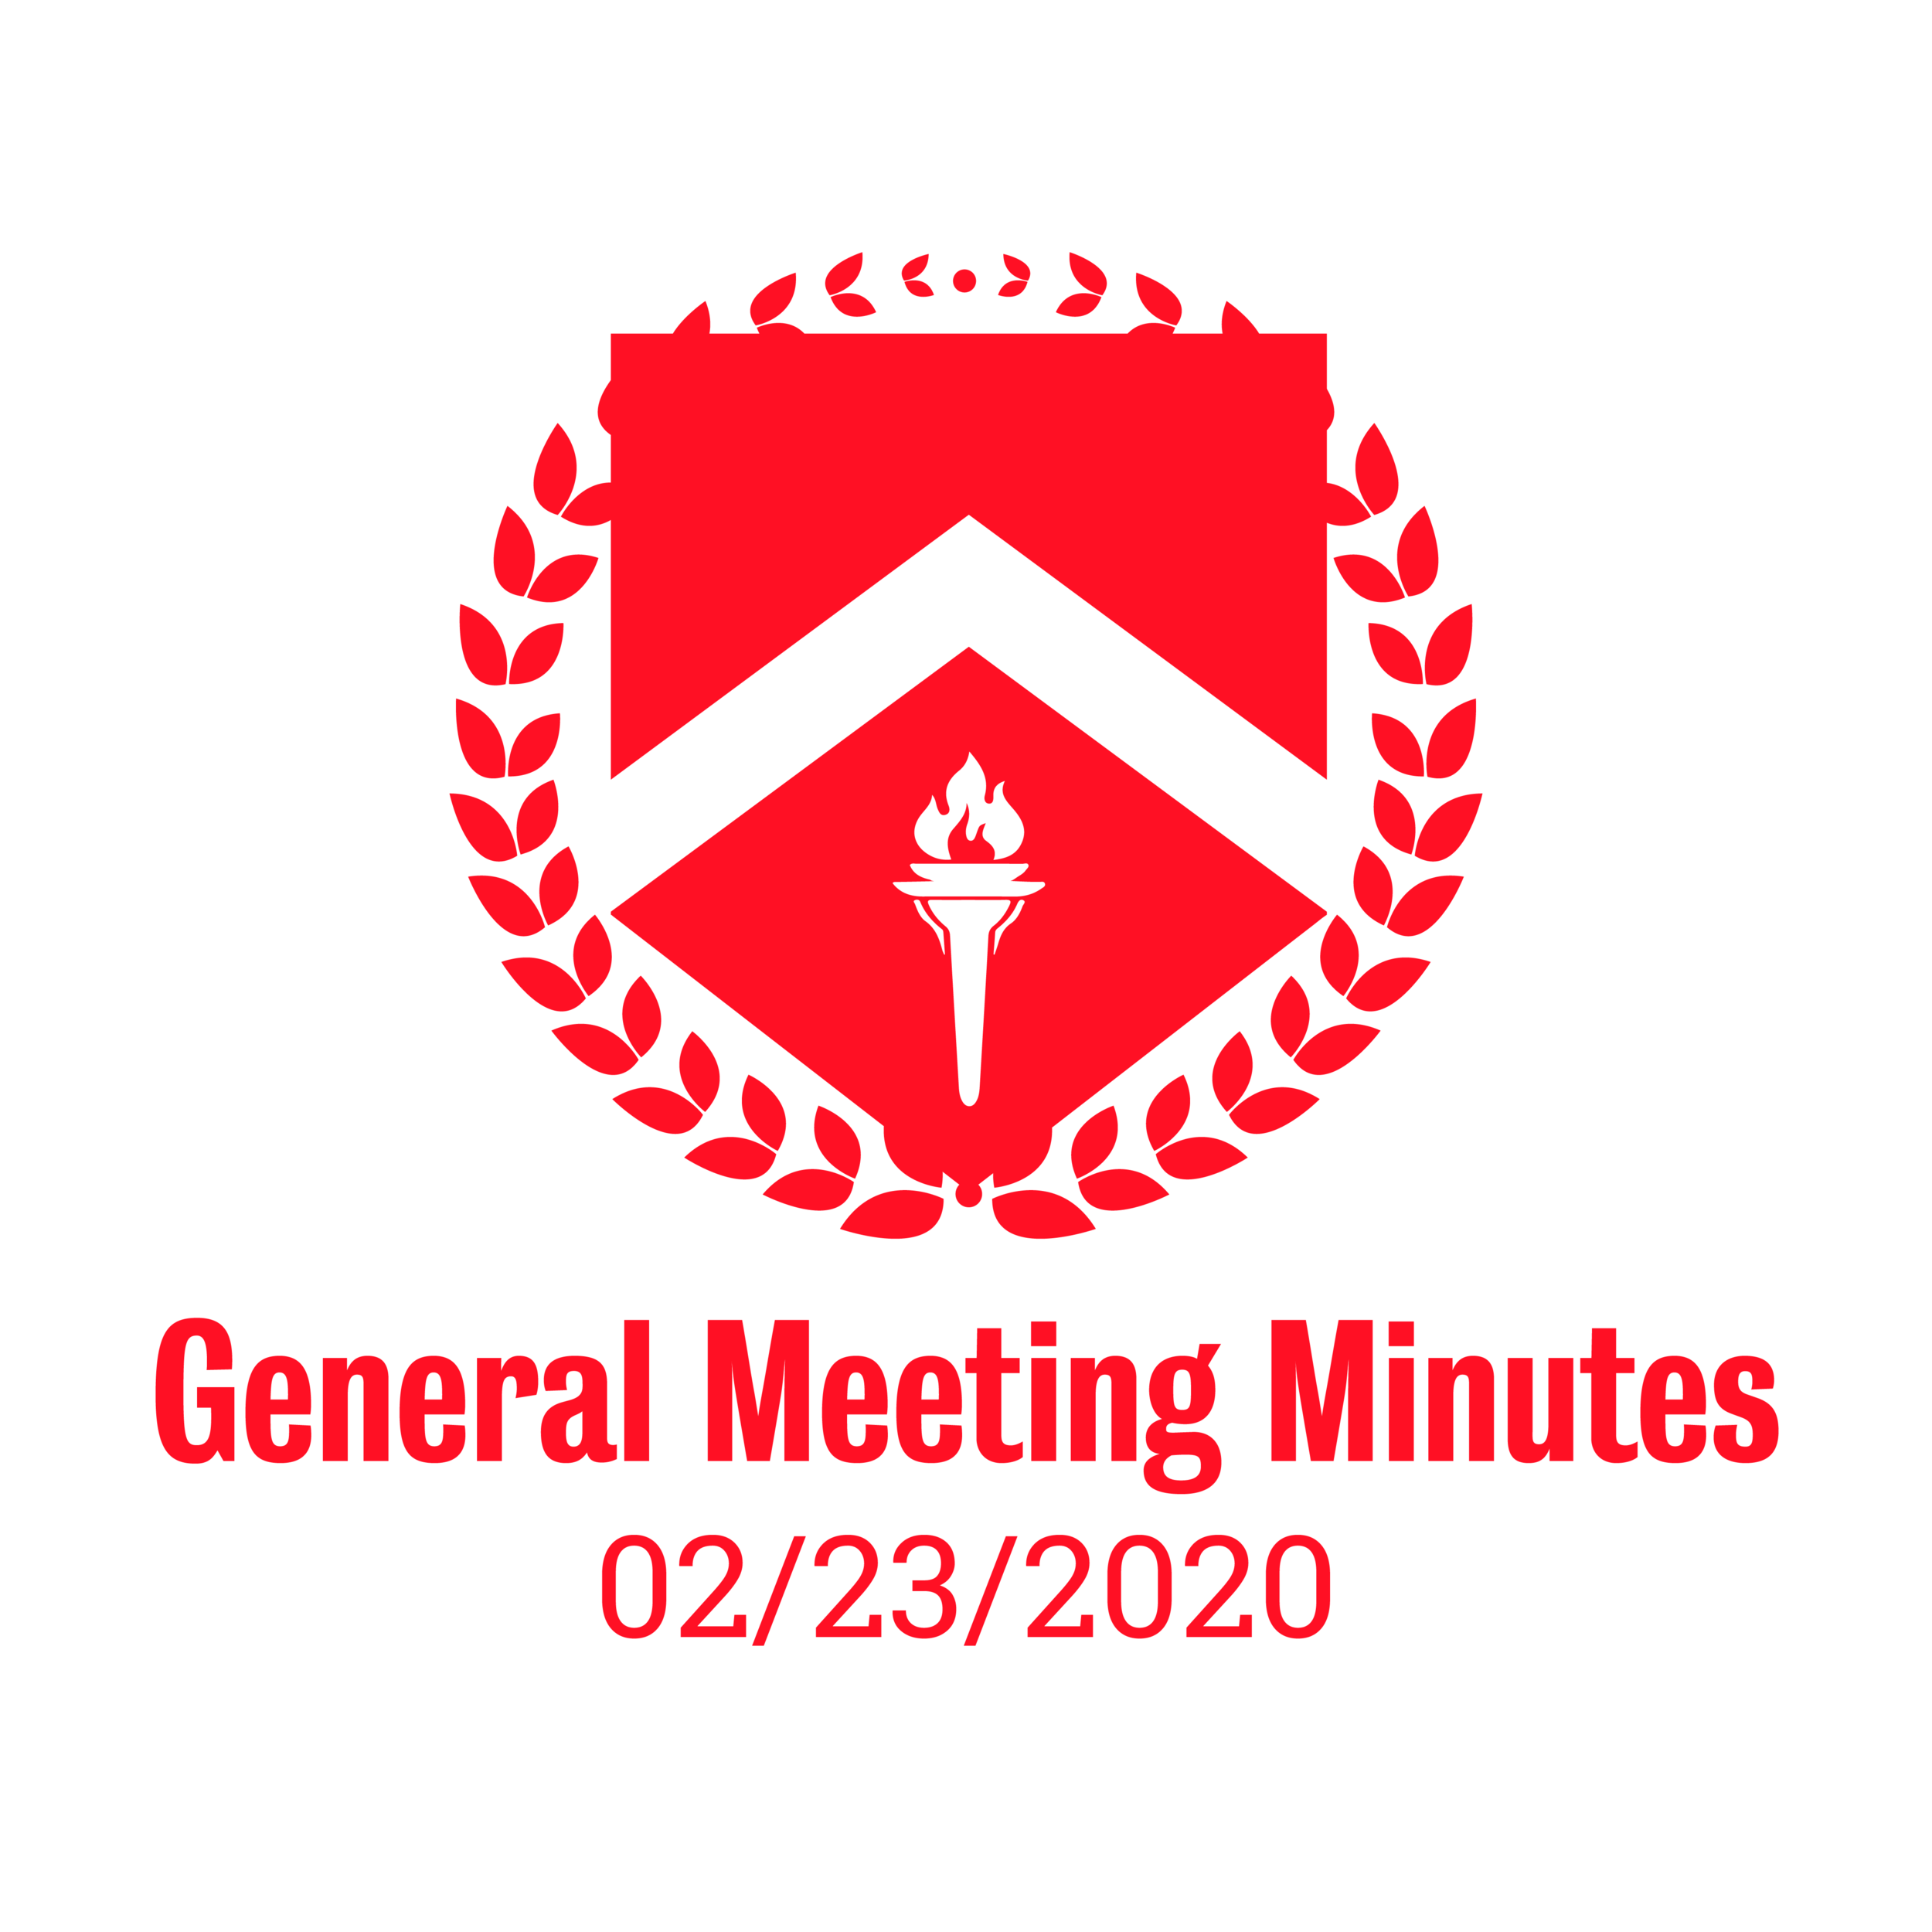 General Meeting Minutes 02/23/2020